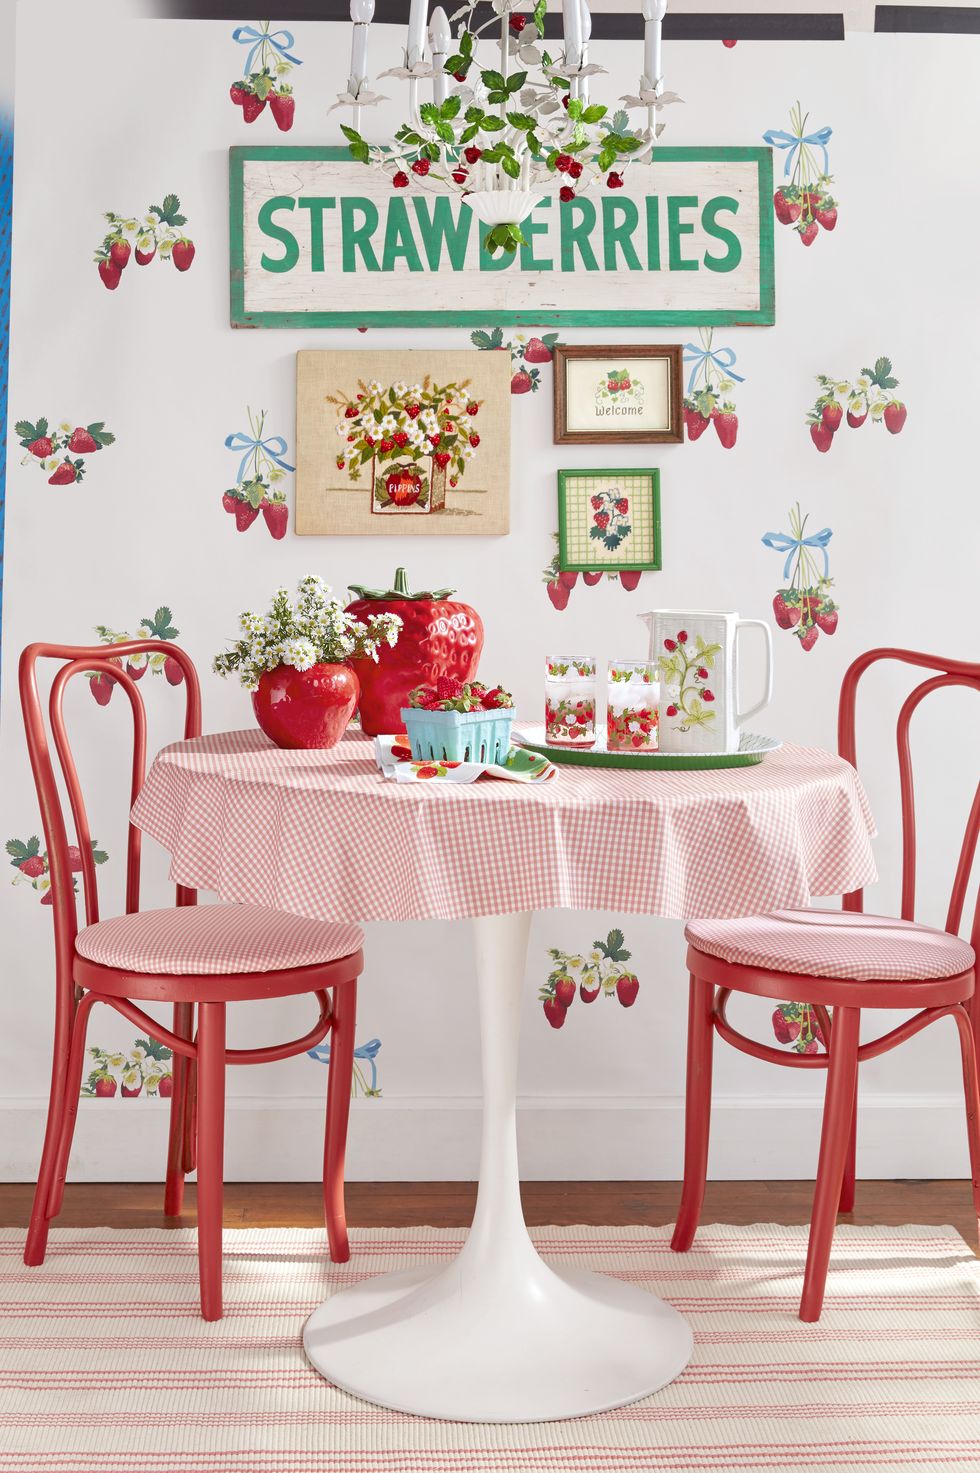 vintage-style strawberry kitchen wallpaper